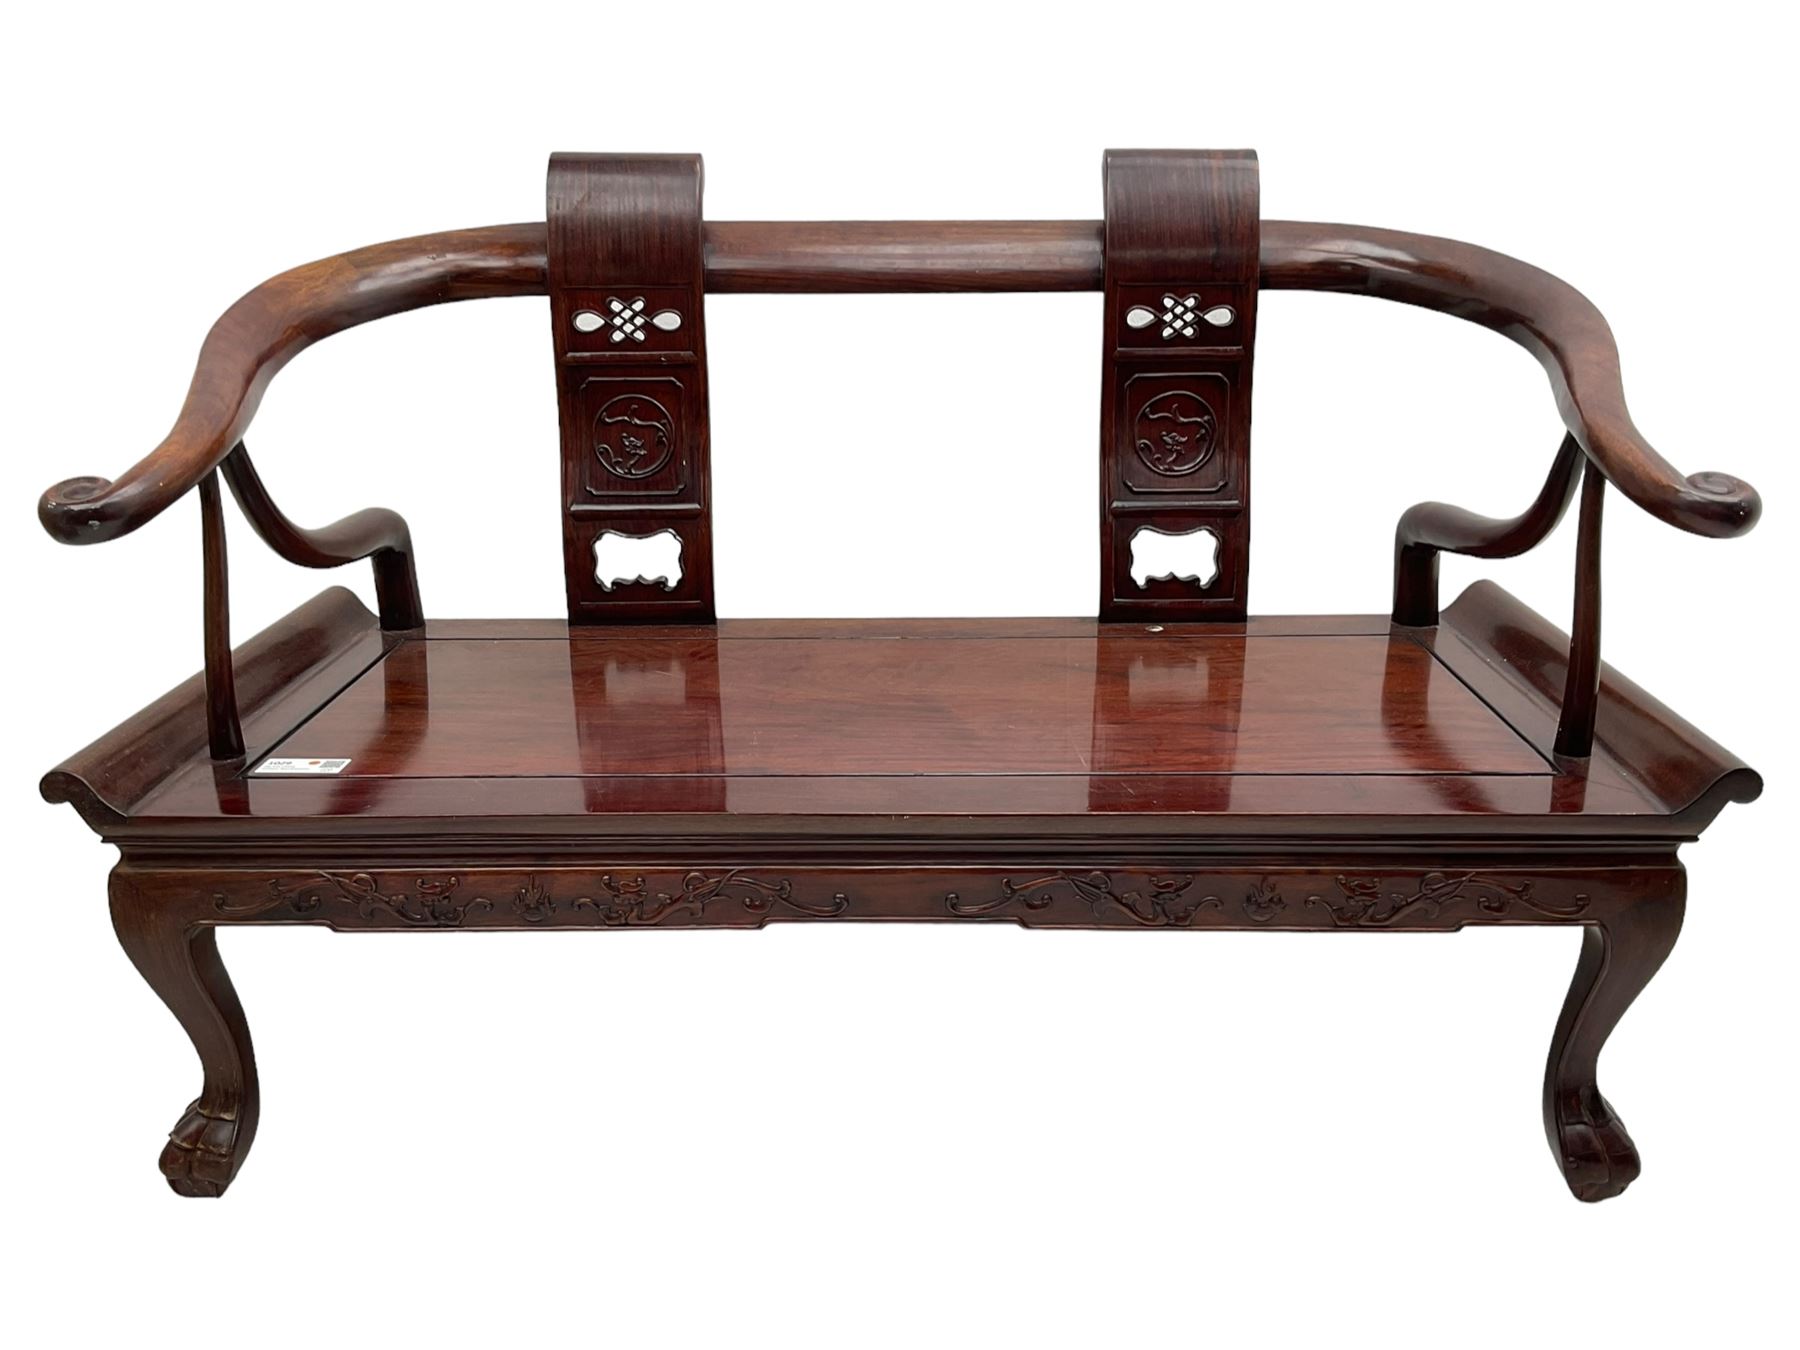 20th century Chinese hardwood two-seat bench - Image 6 of 6